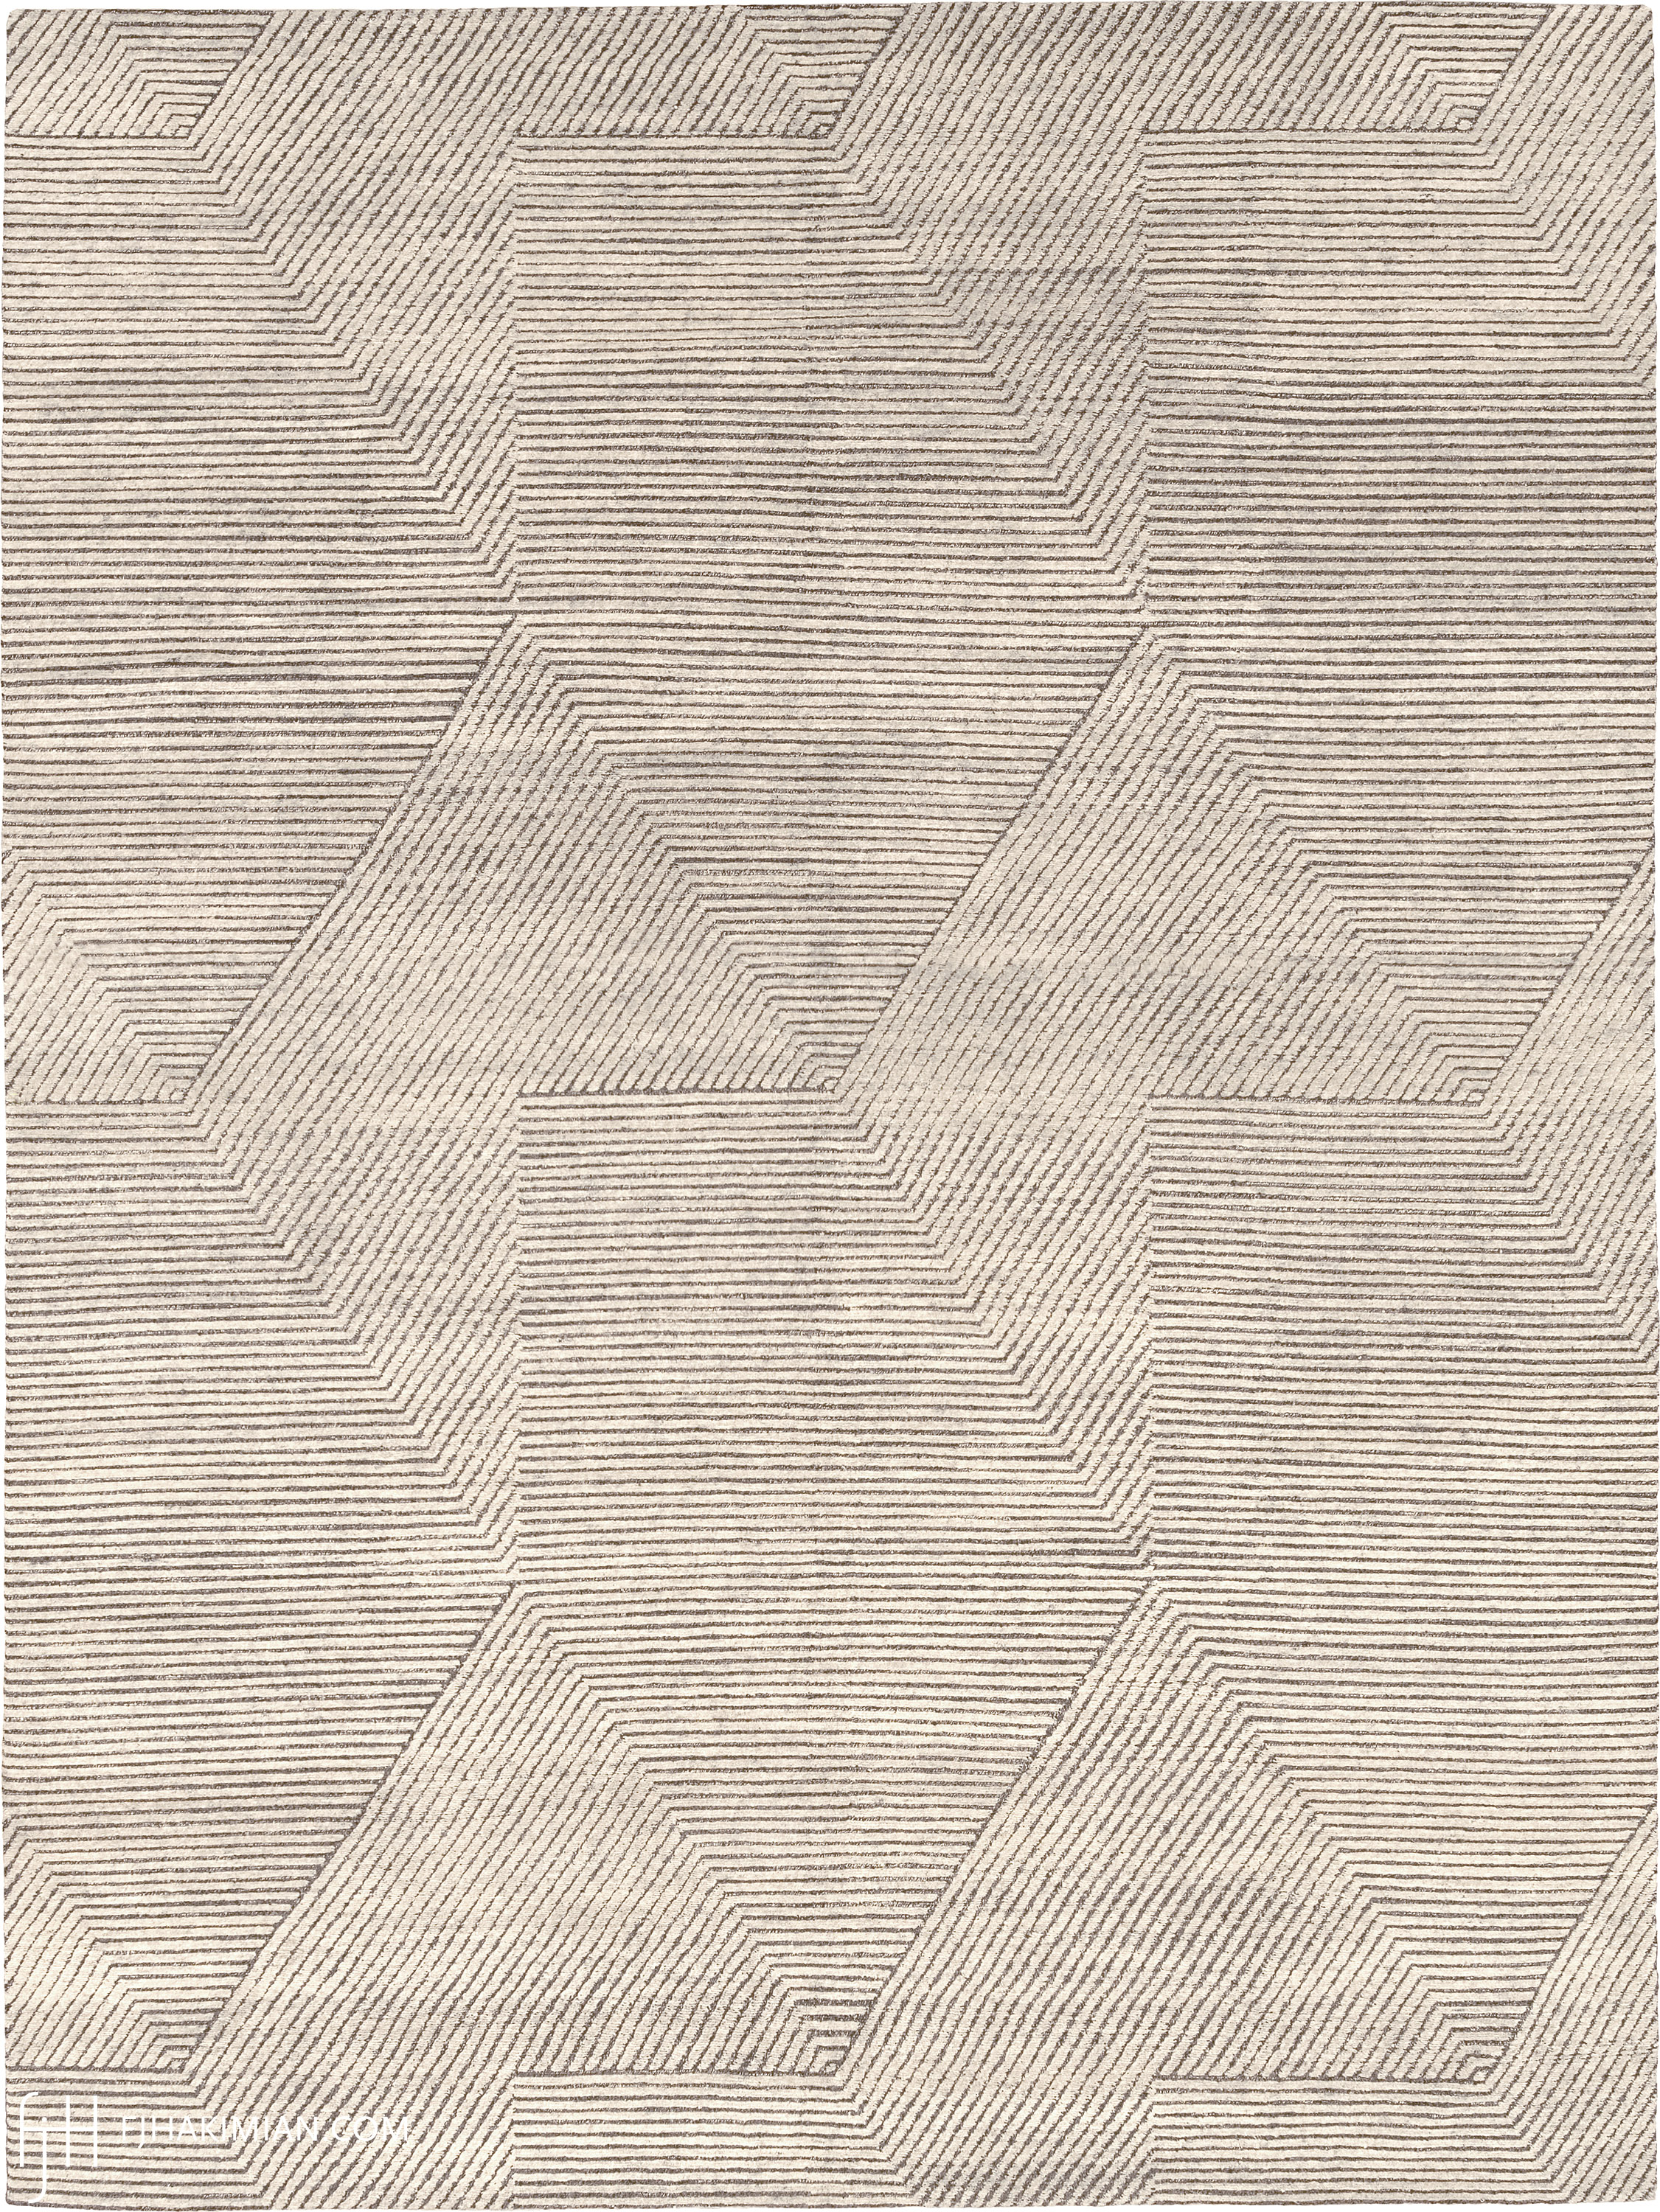 16993 Boggeri | Custom Modern & 20th Century Design Carpet | FJ Hakimian | Carpet Gallery in NYC